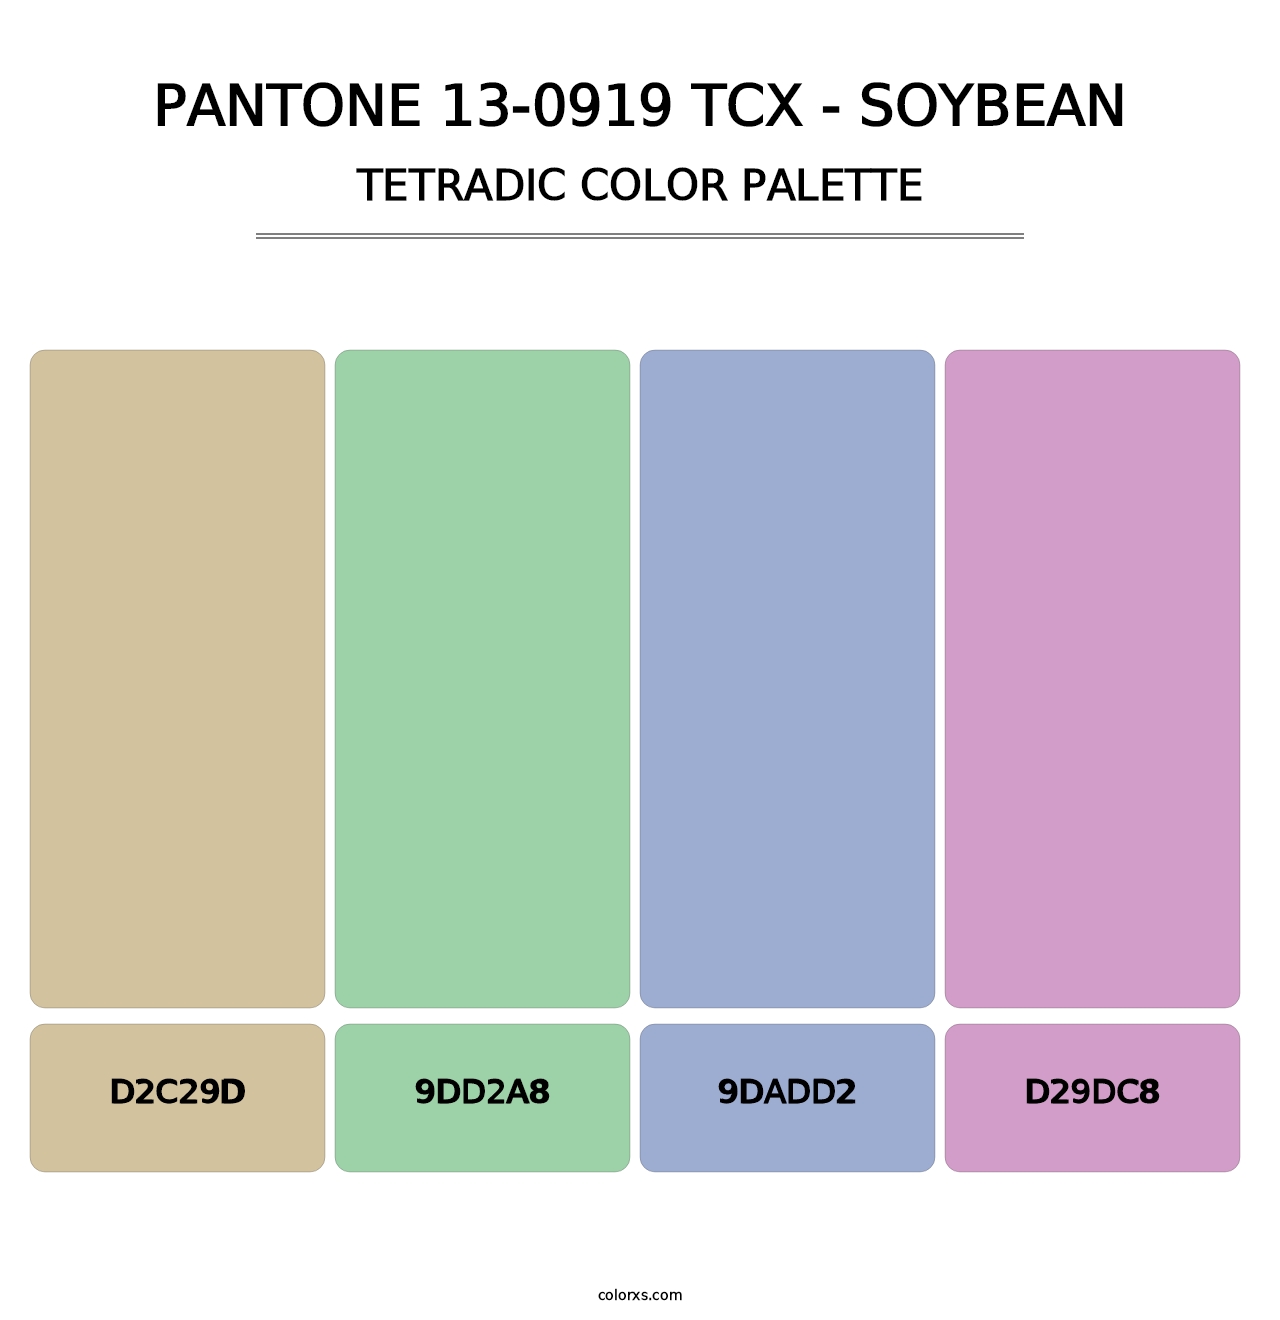 PANTONE 13-0919 TCX - Soybean - Tetradic Color Palette